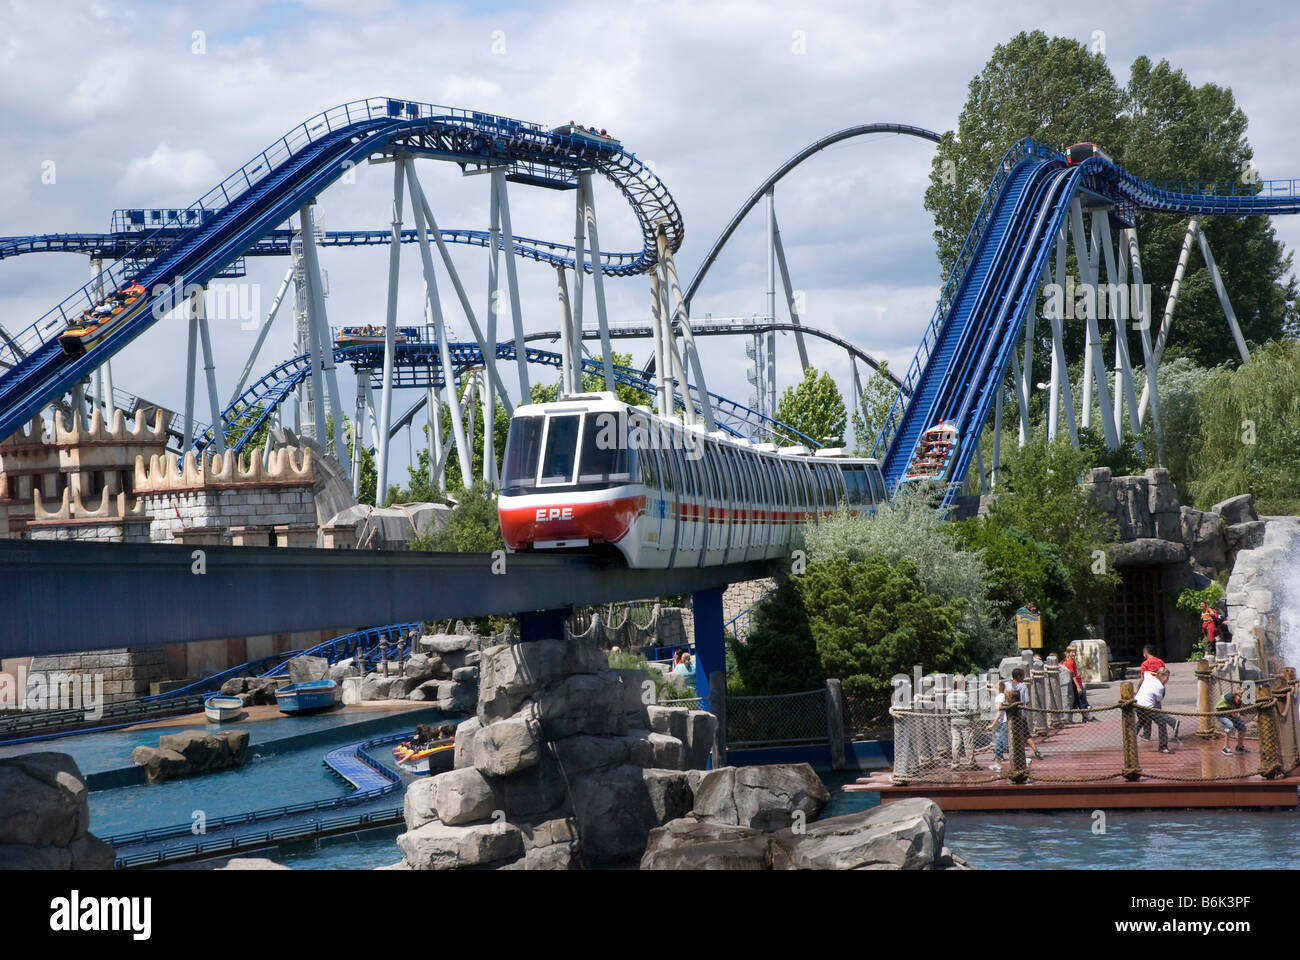 Poseidon roller coaster at Europa Park, Rust, Germany Stock Photo - Alamy